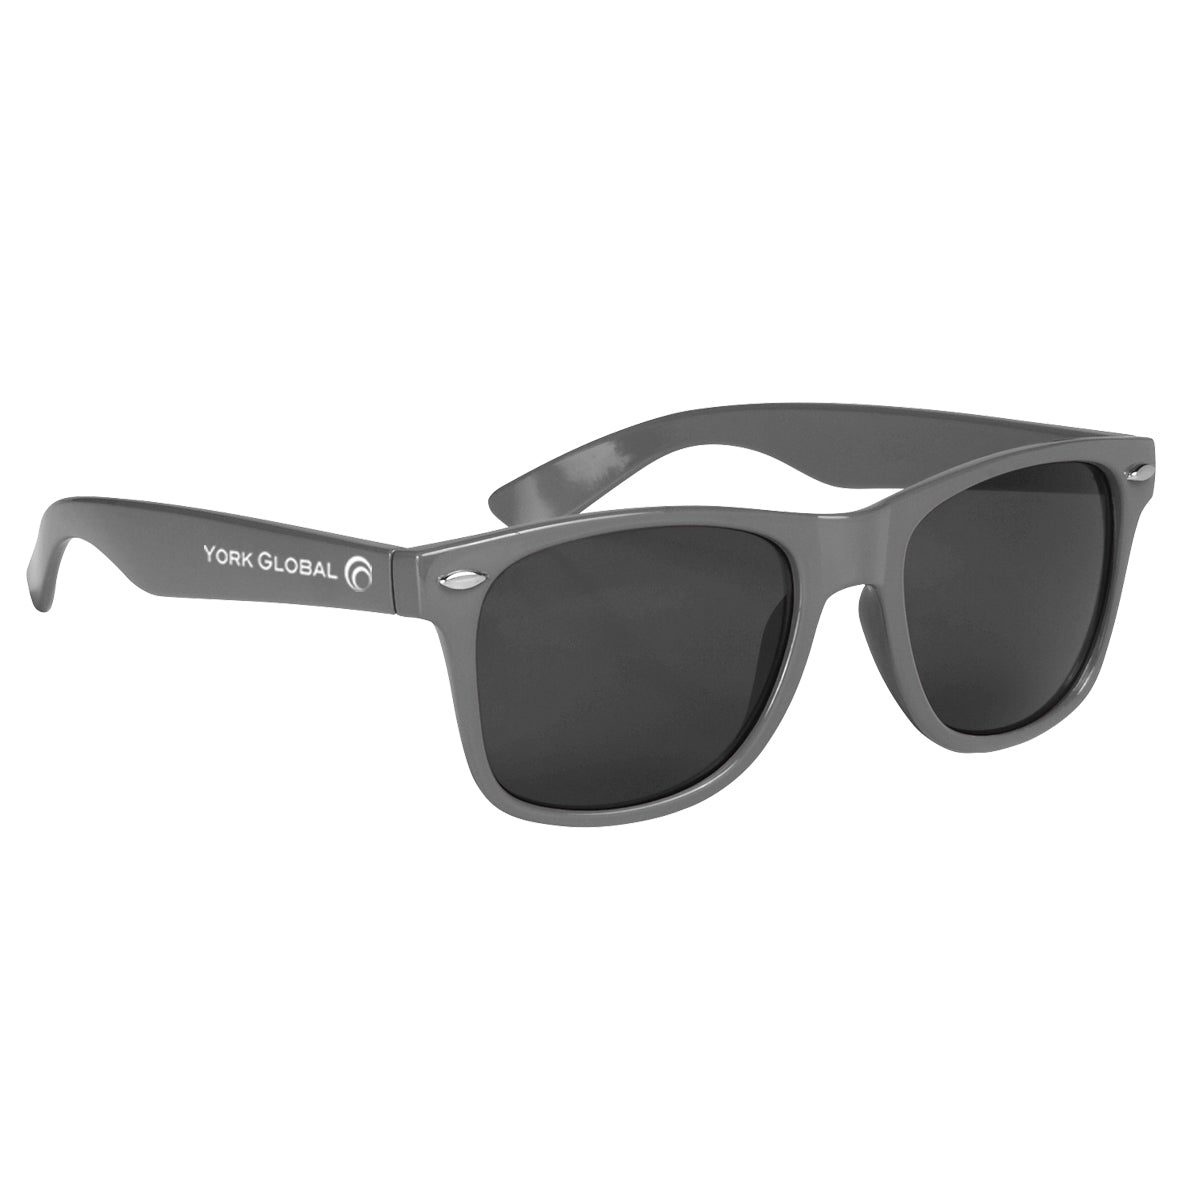 Malibu Sunglasses Sunglasses Hit Promo Gray Single Color 